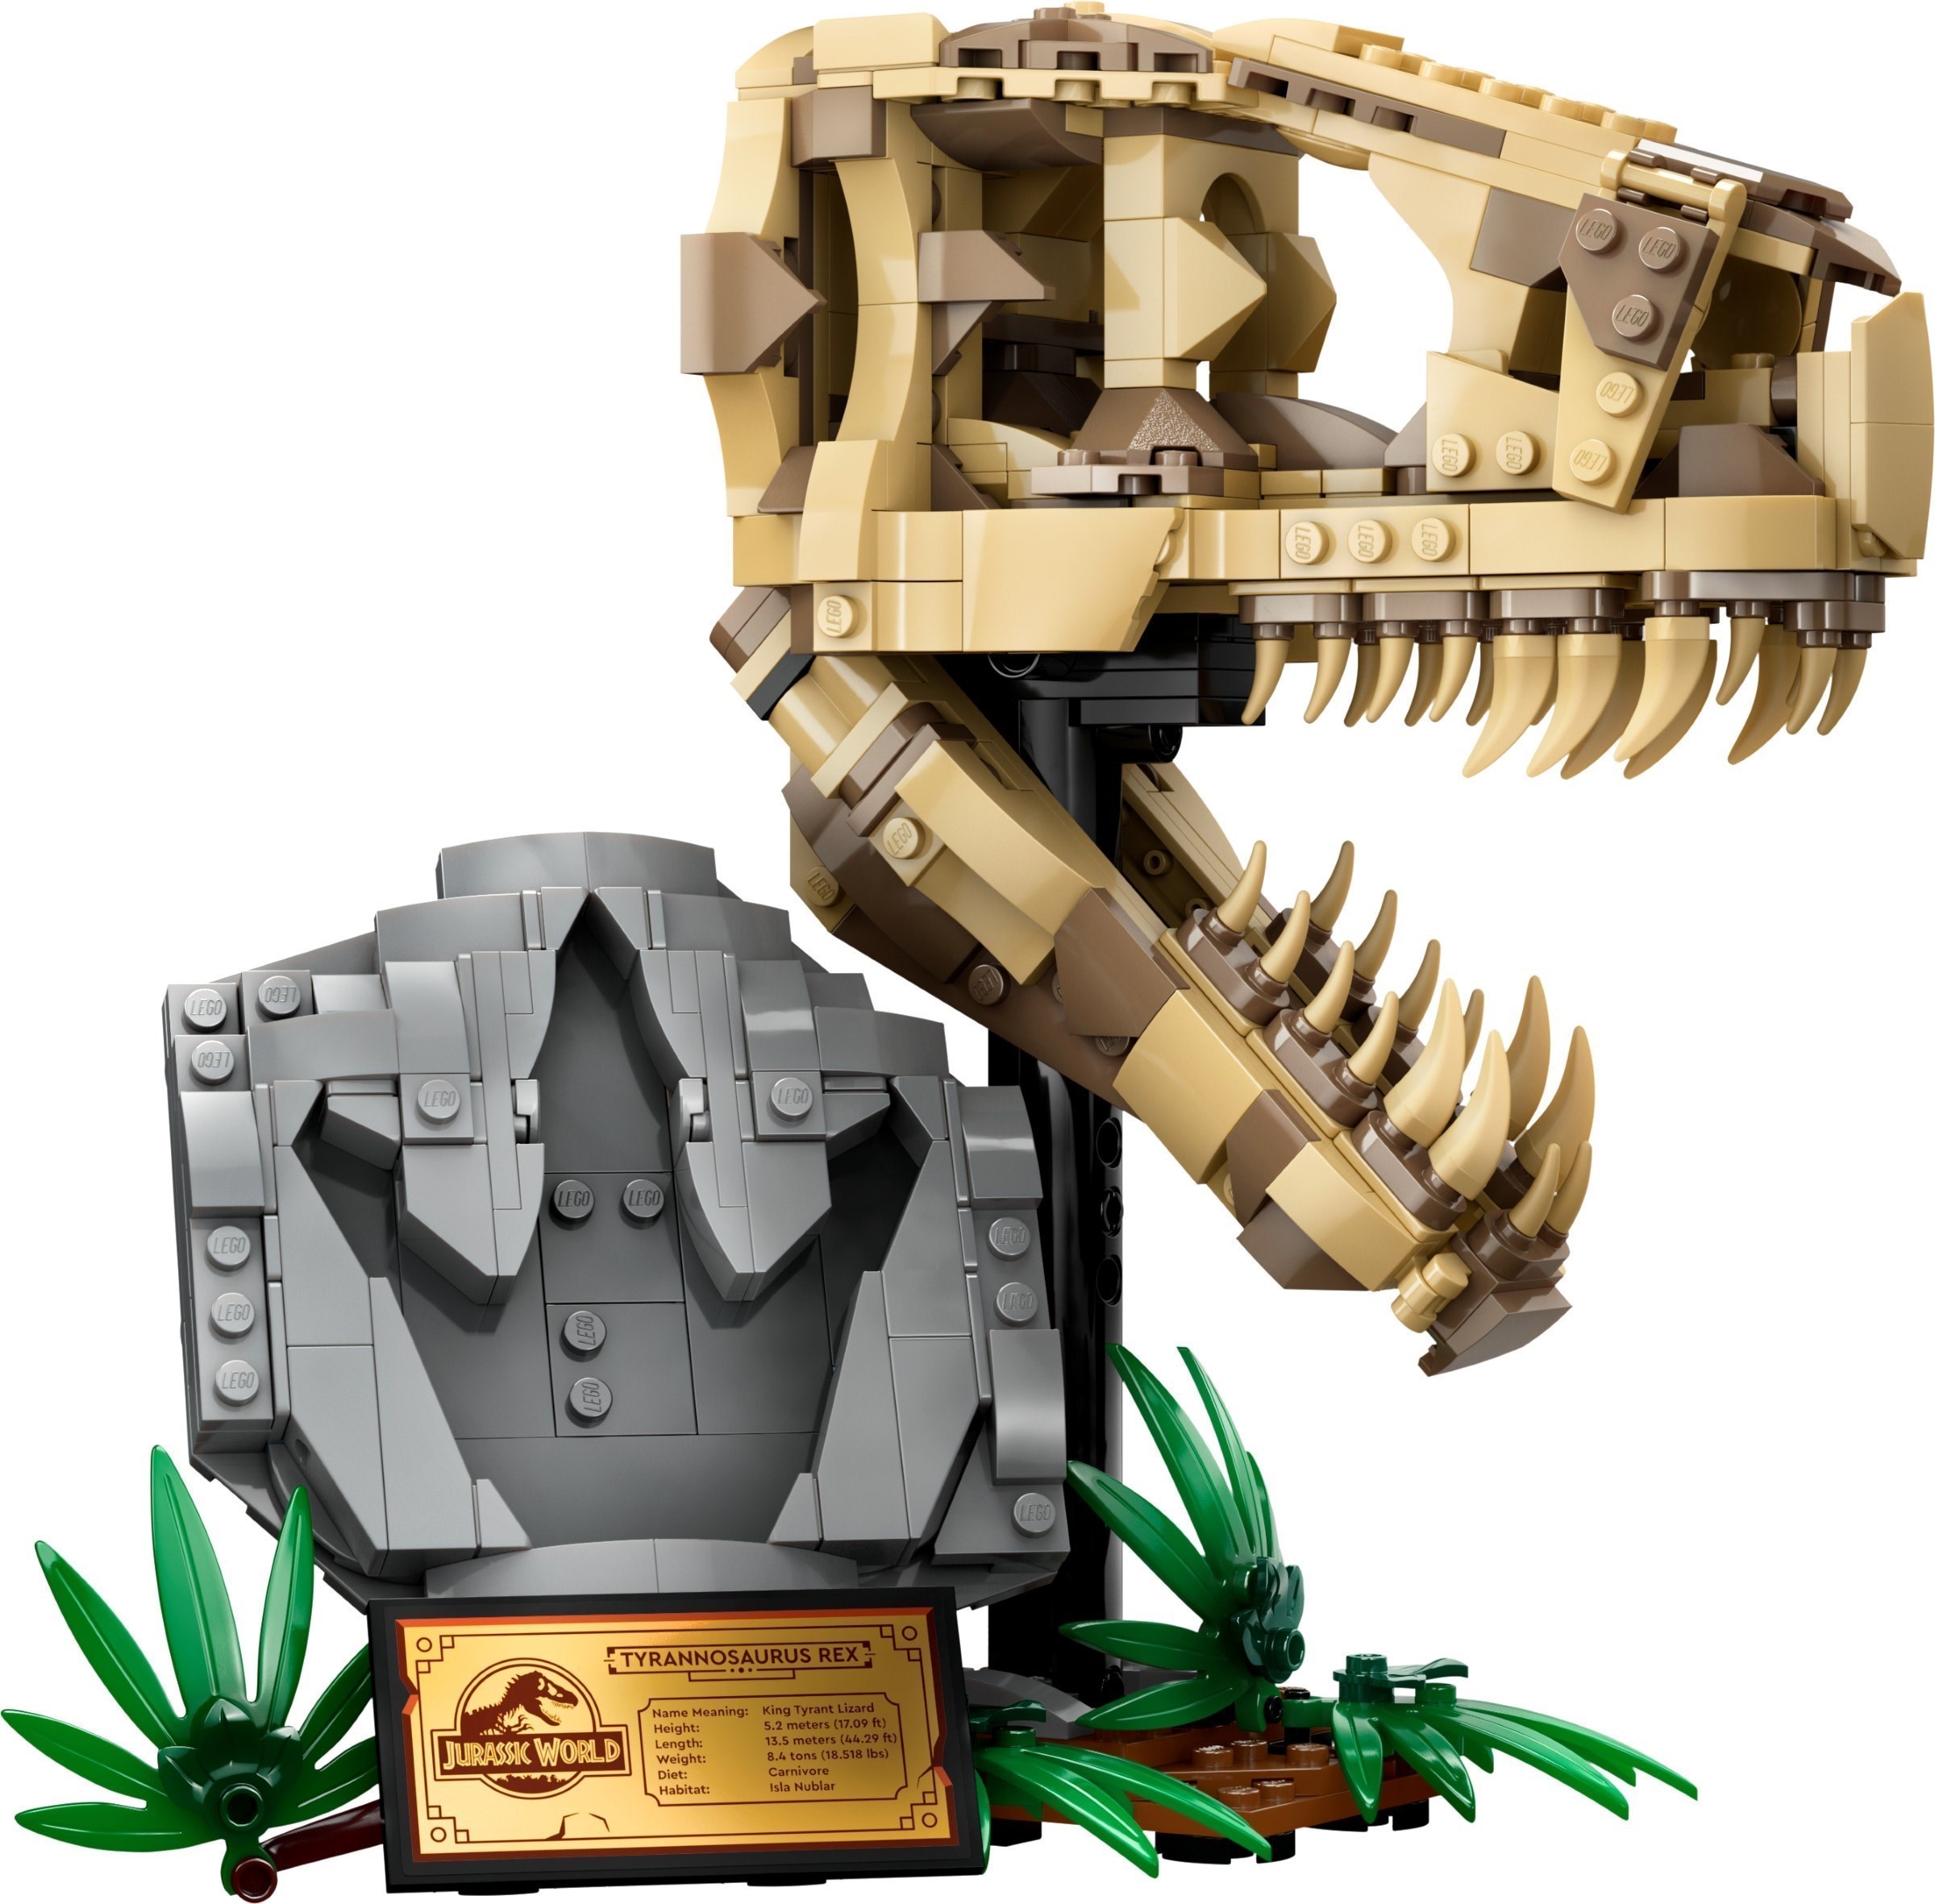 The Enemy - LEGO Jurassic World chega em setembro ao Nintendo Switch